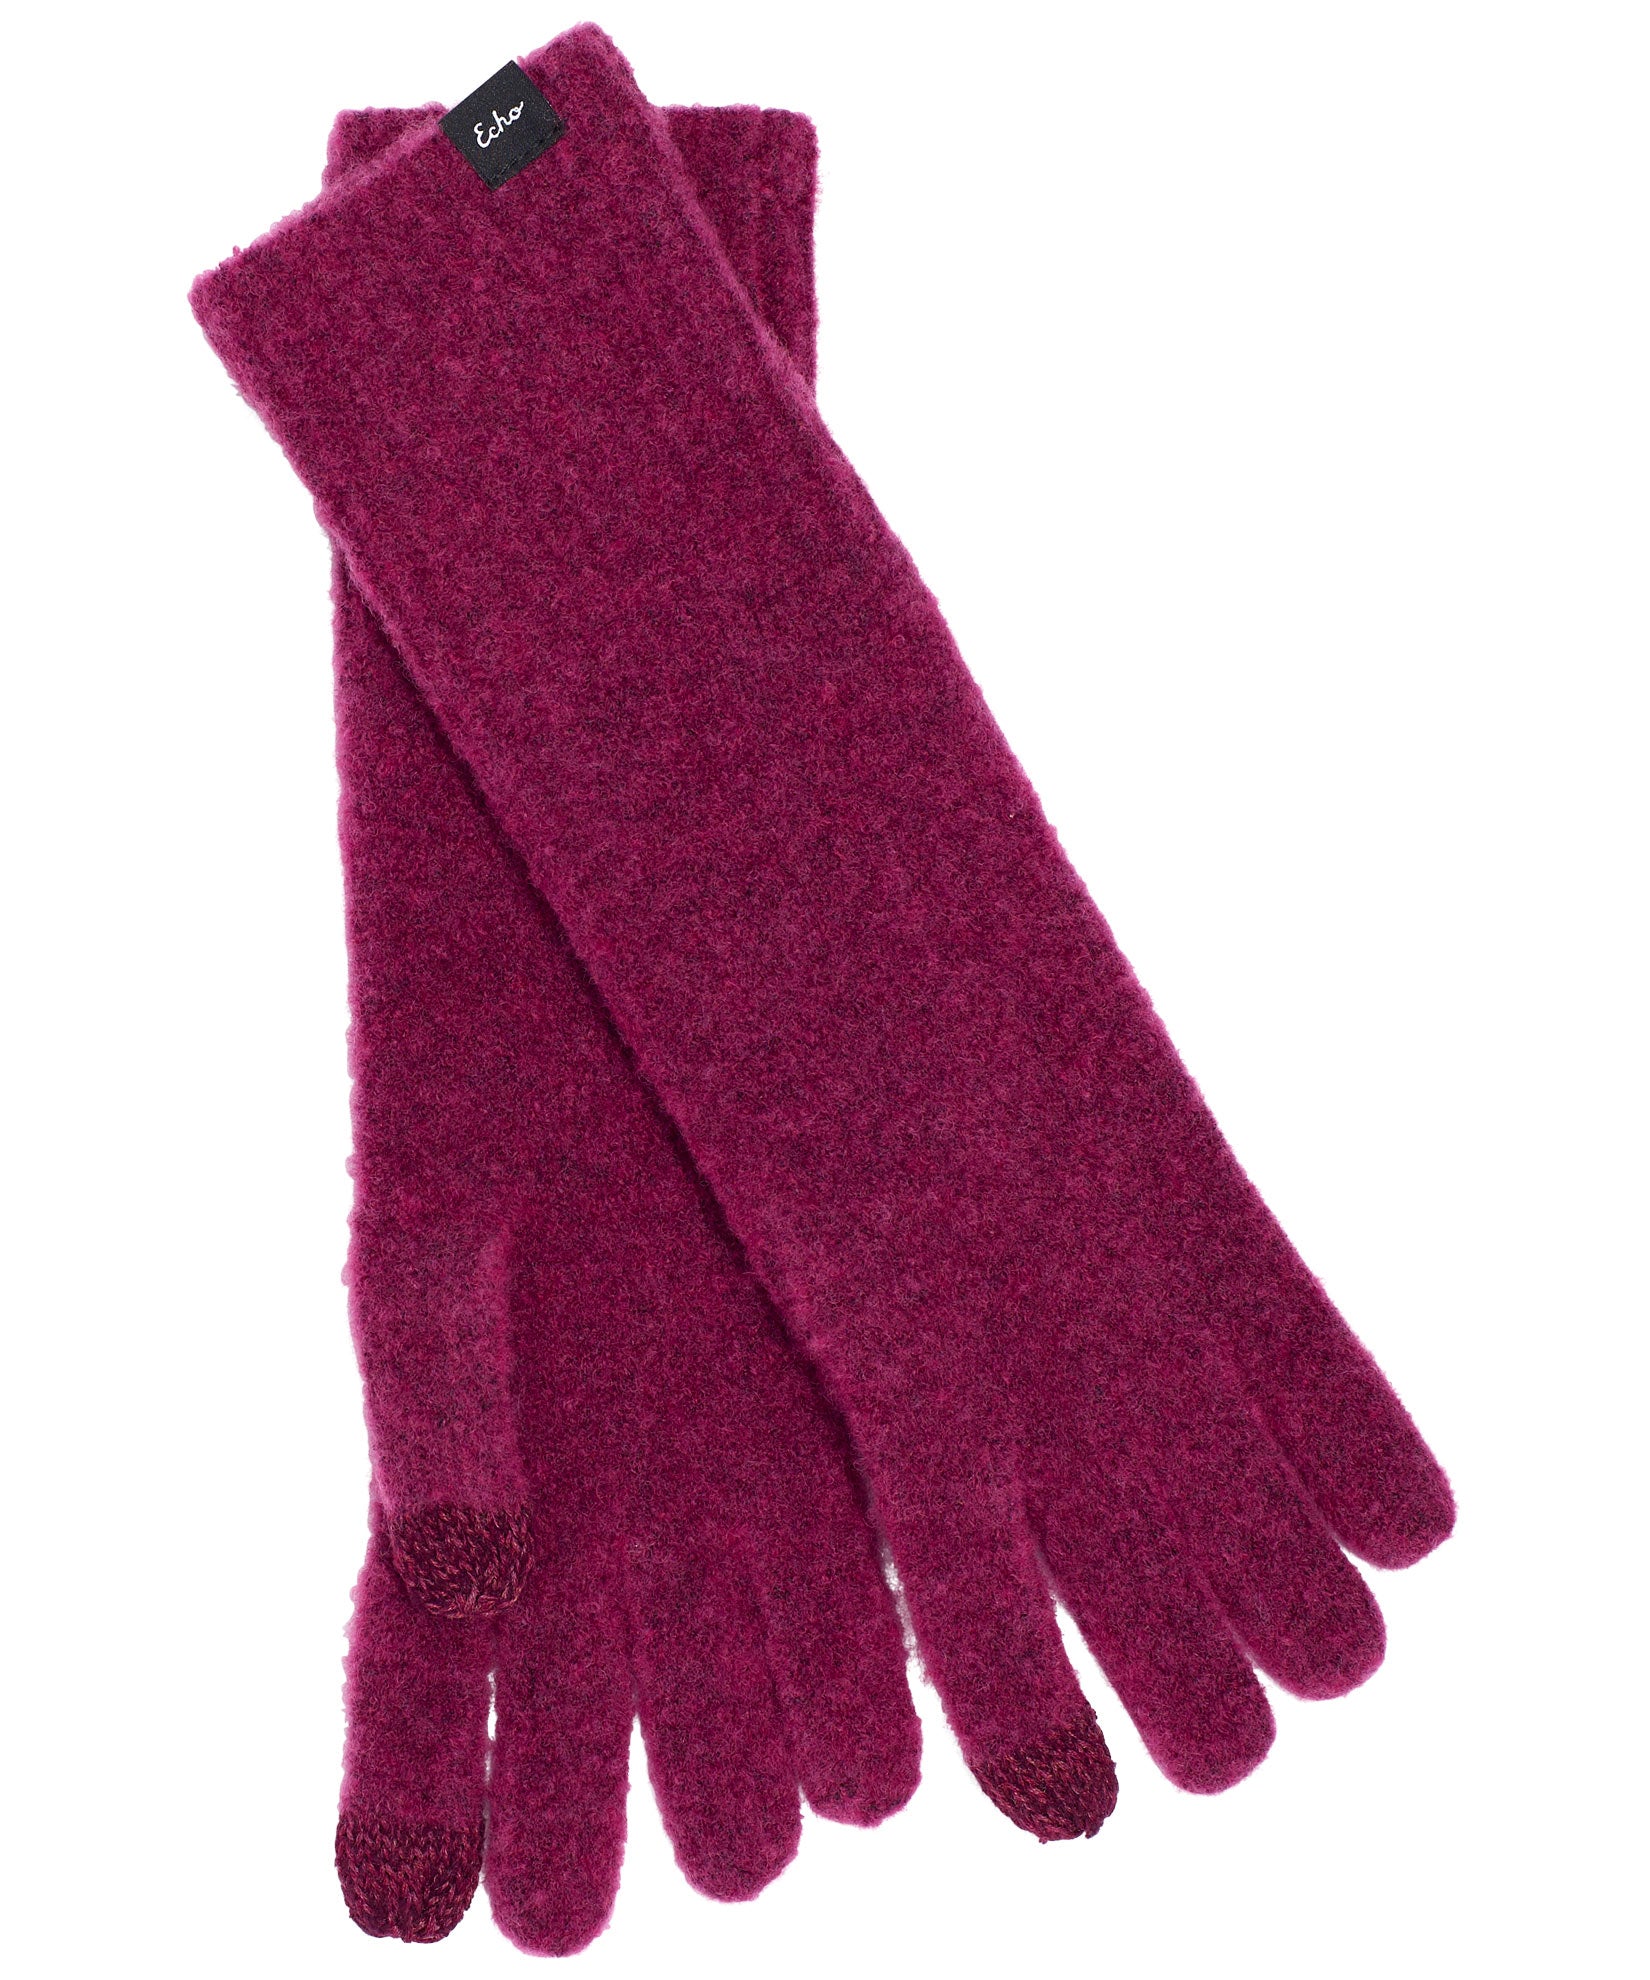 Rib Cuff Glove in color Boysenberry